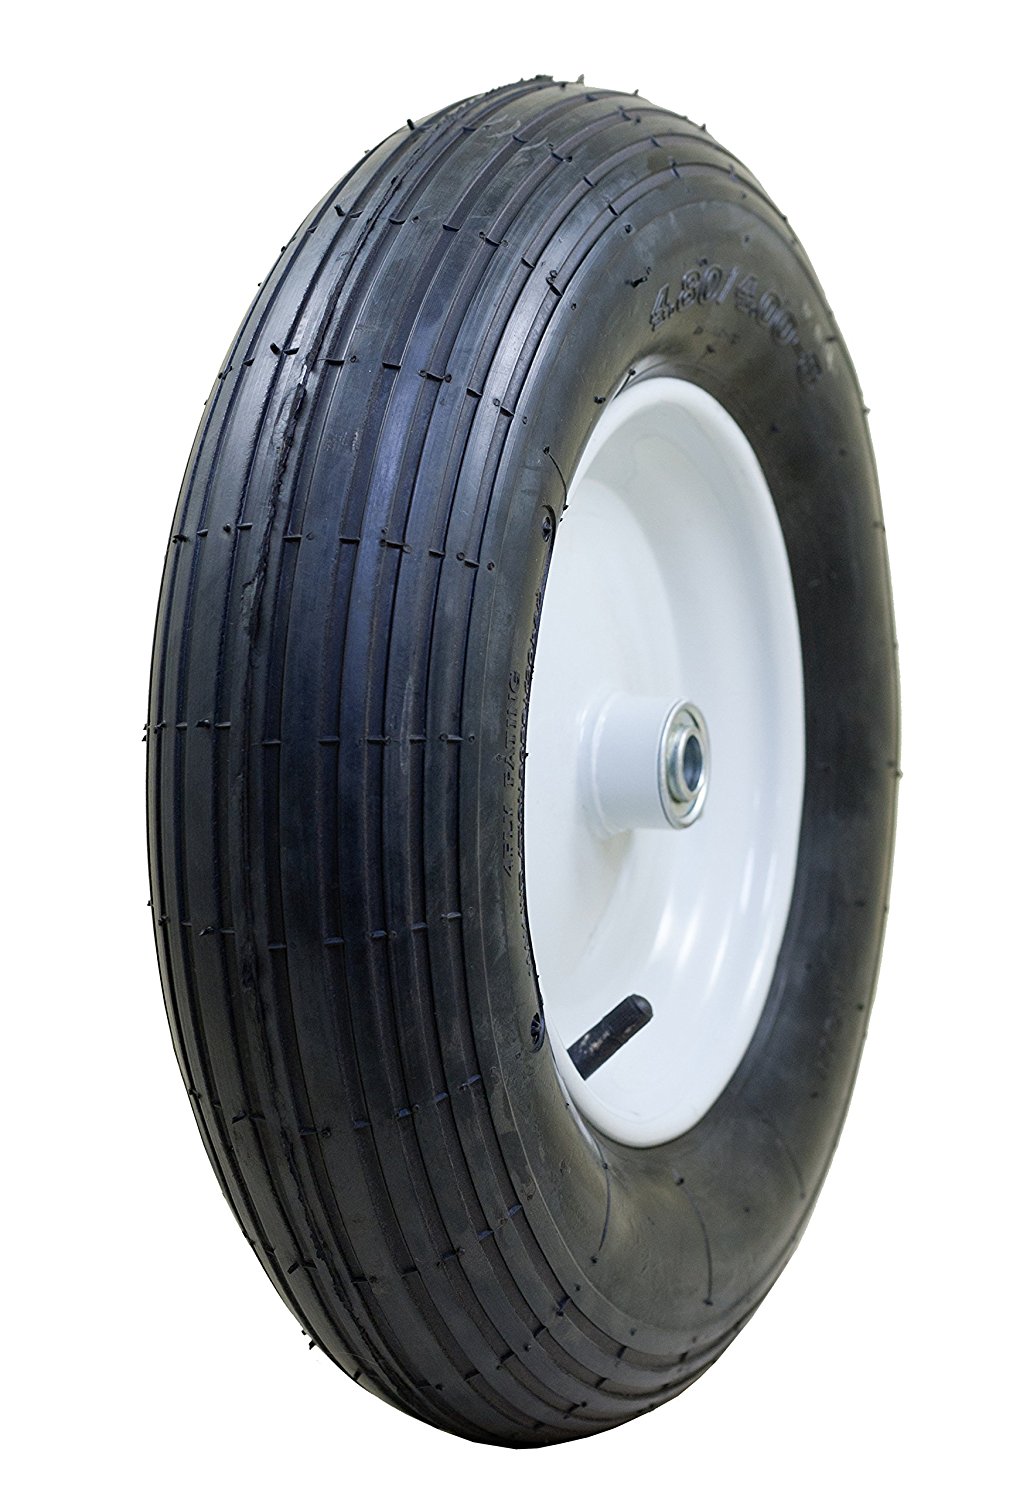 arathon 4.80/4.00-8" Pneumatic (Air Filled) Tire on Wheel, 3" Hub, 3/4 Bearings, Ribbed Tread